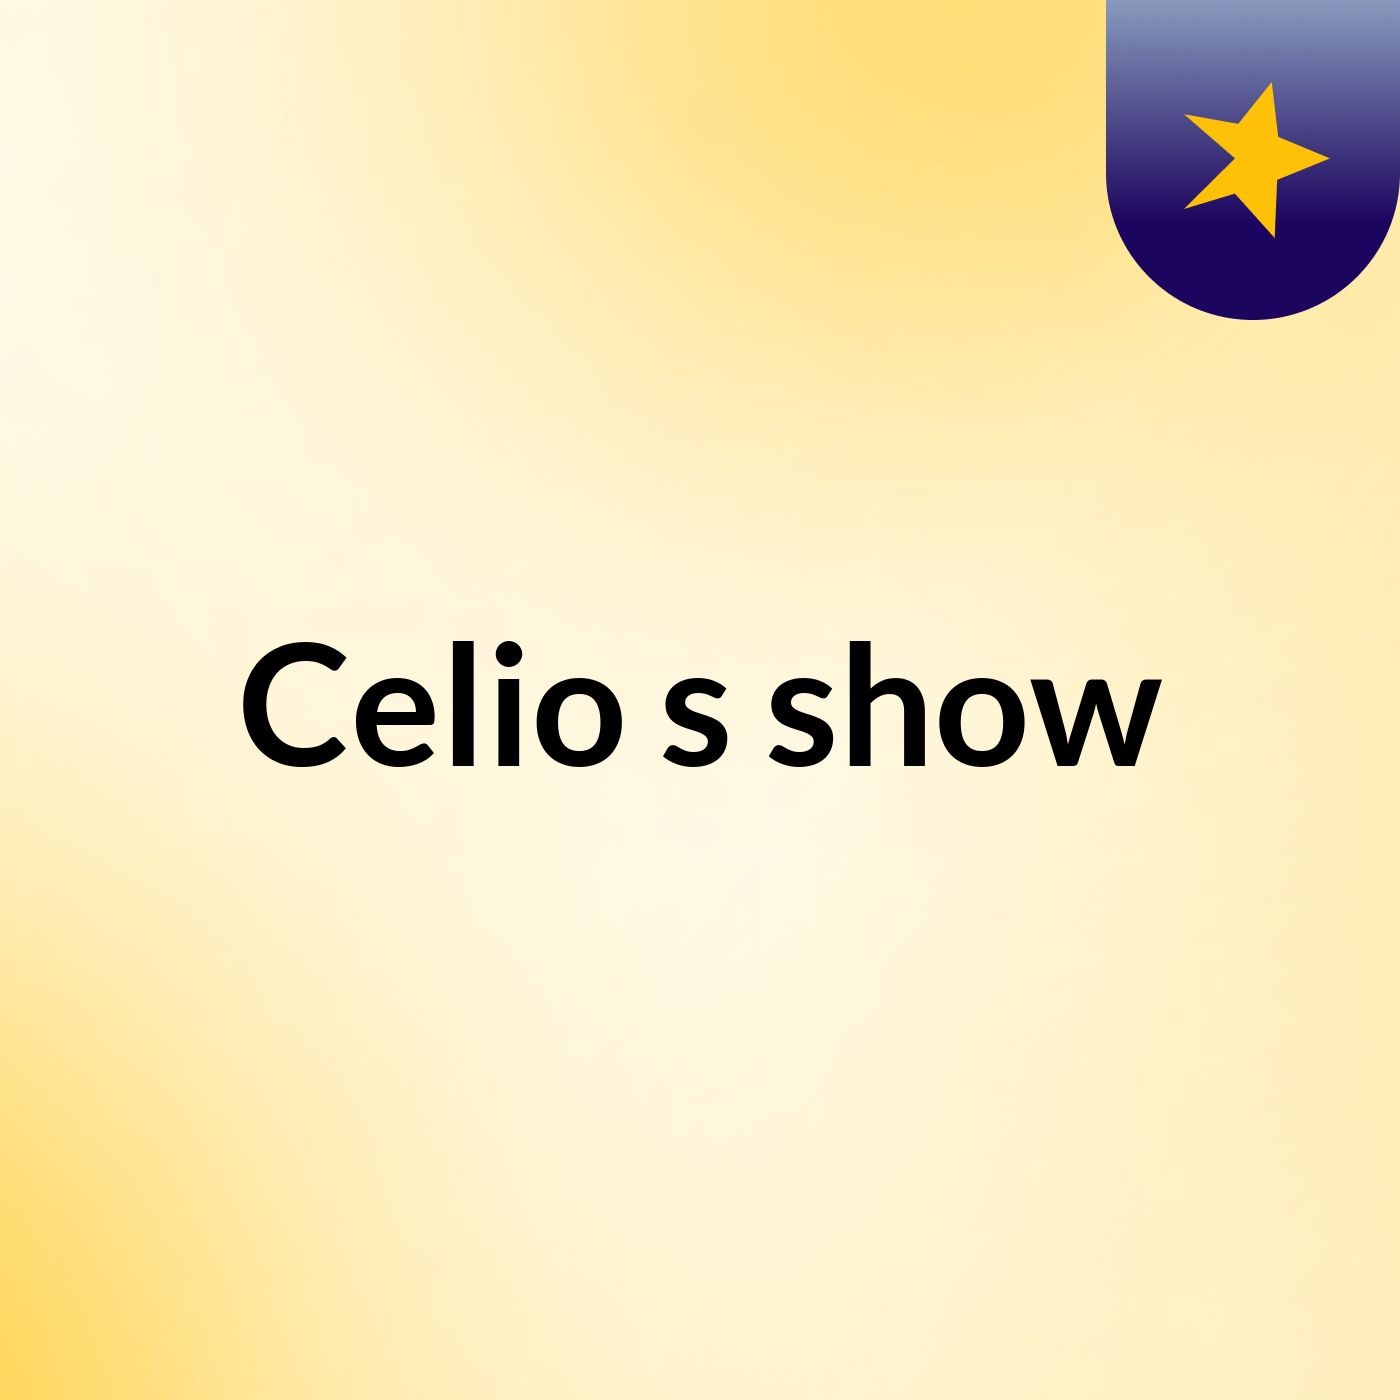 Celio's show